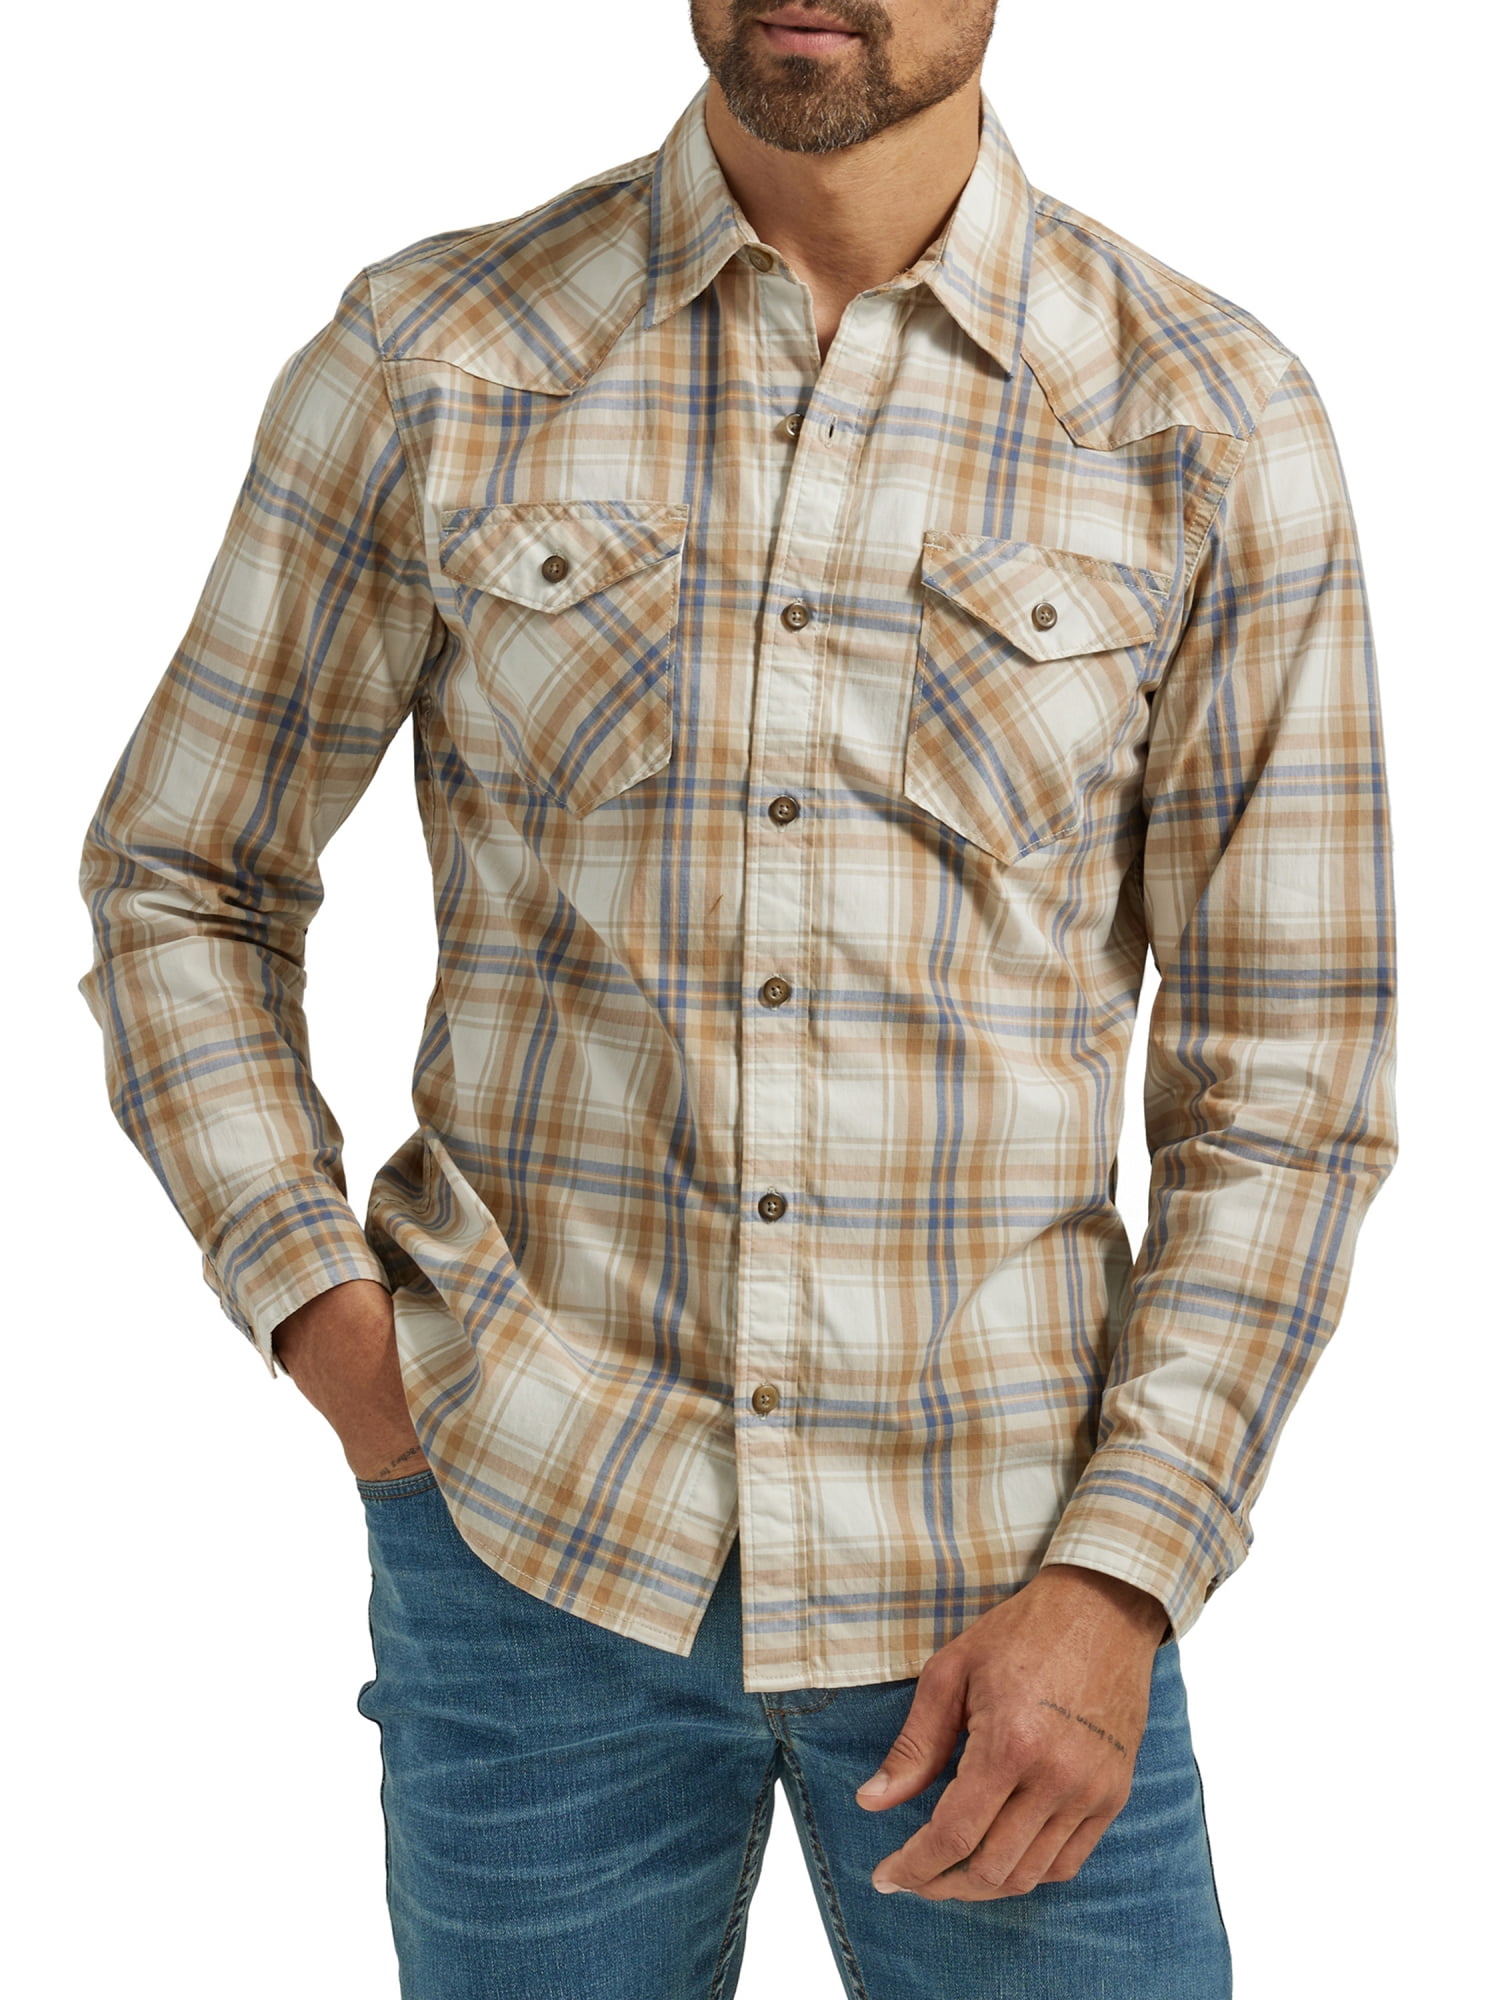 Wrangler Men's Long Sleeve Volume Fashion Woven Shirt, Sizes S-5XL